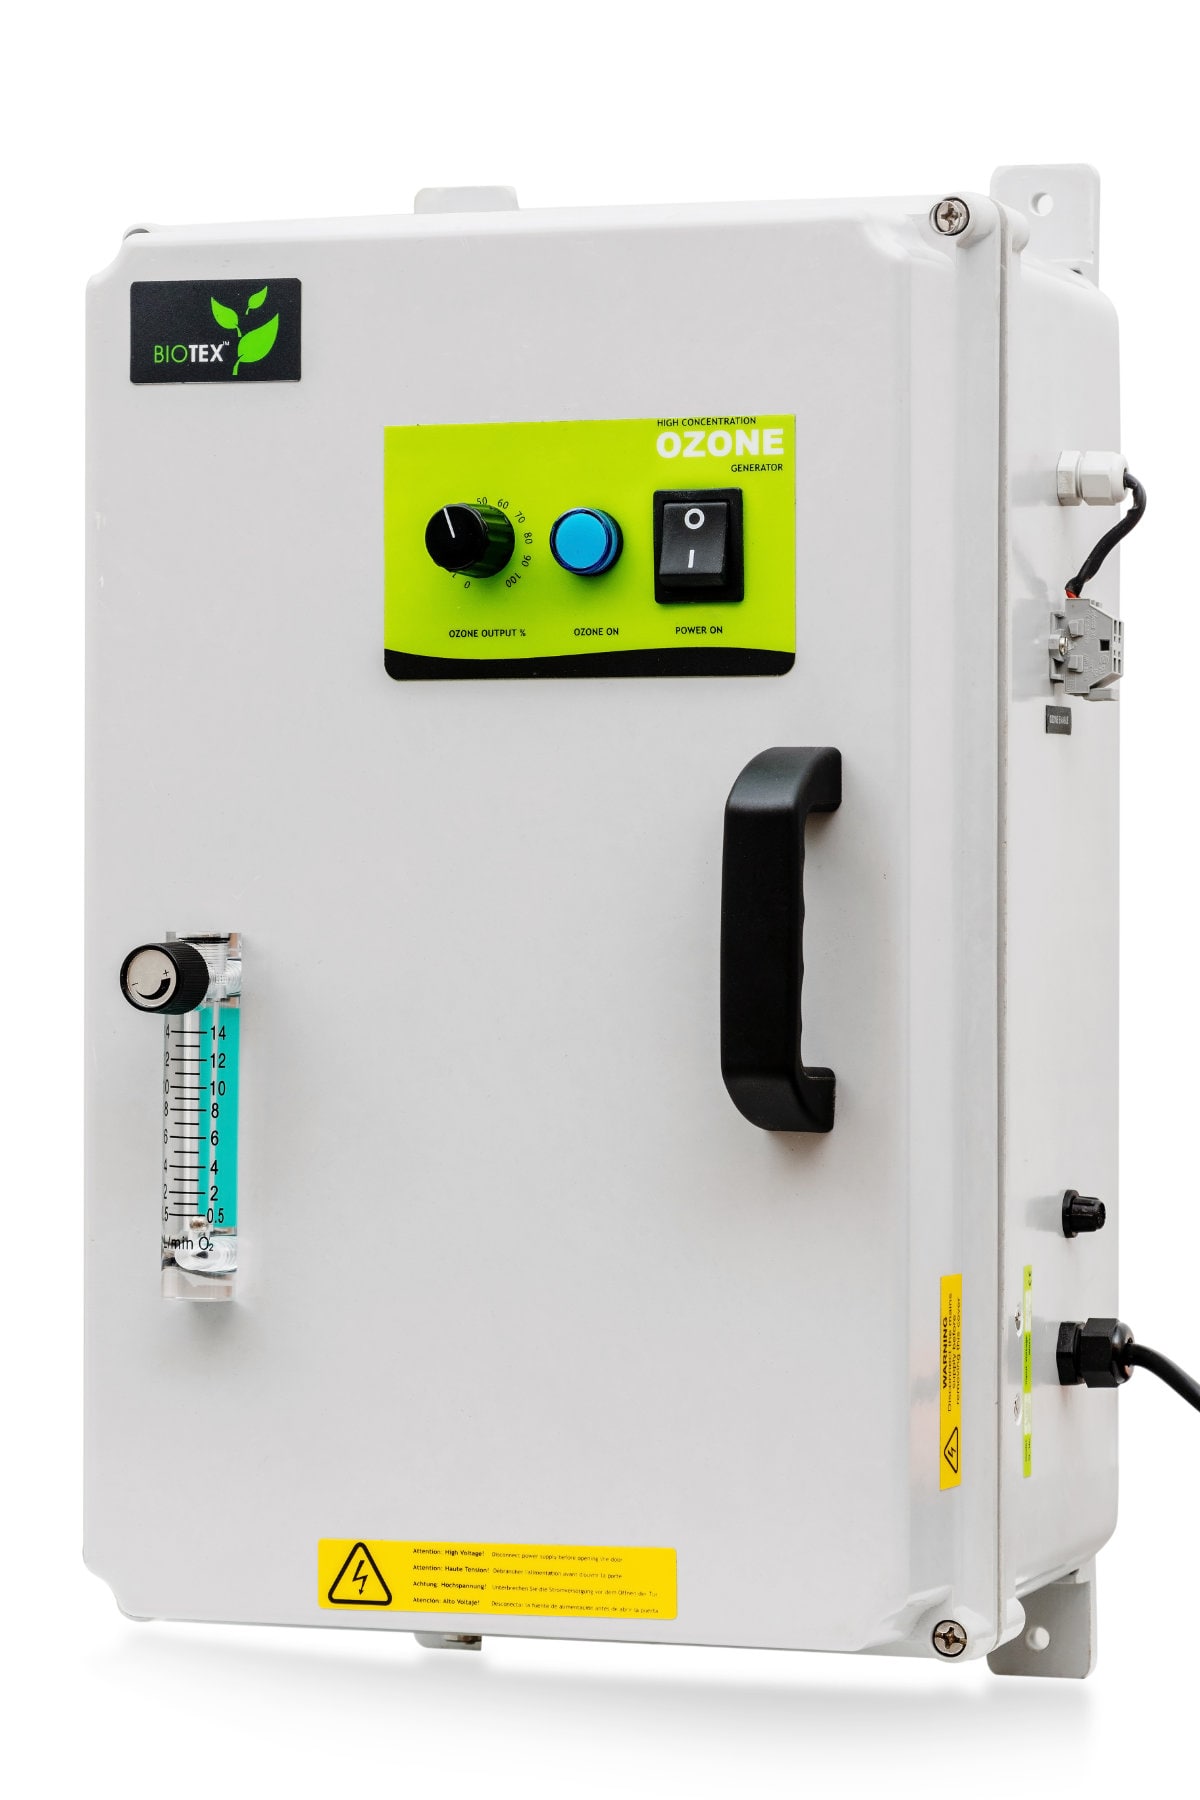 Biotex's GPR Industrial Ozone Generator